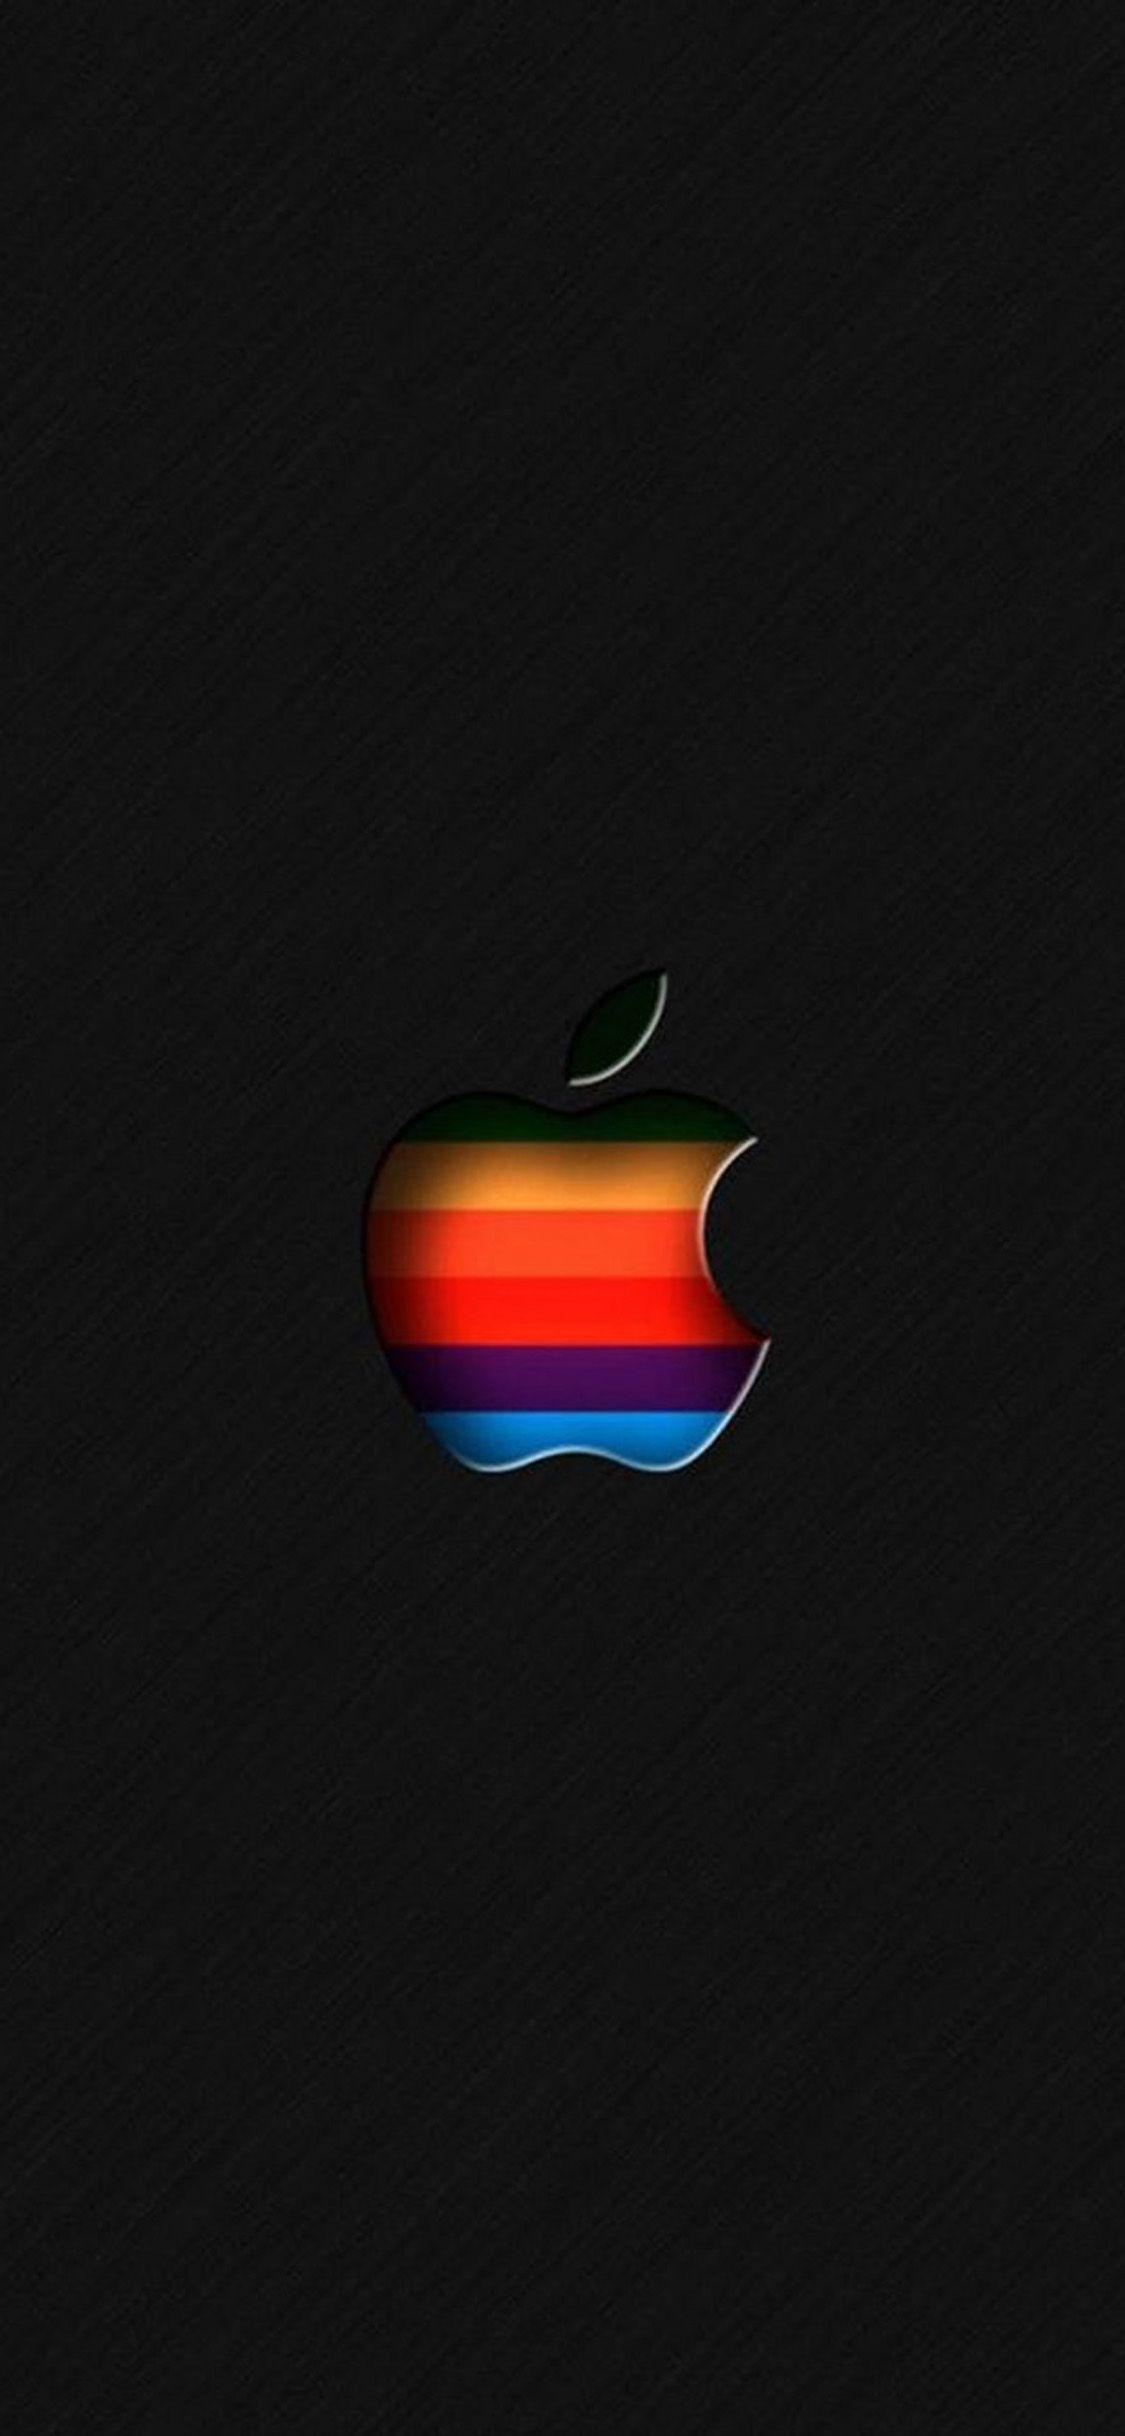 iPhone X Apple Logo Wallpaper